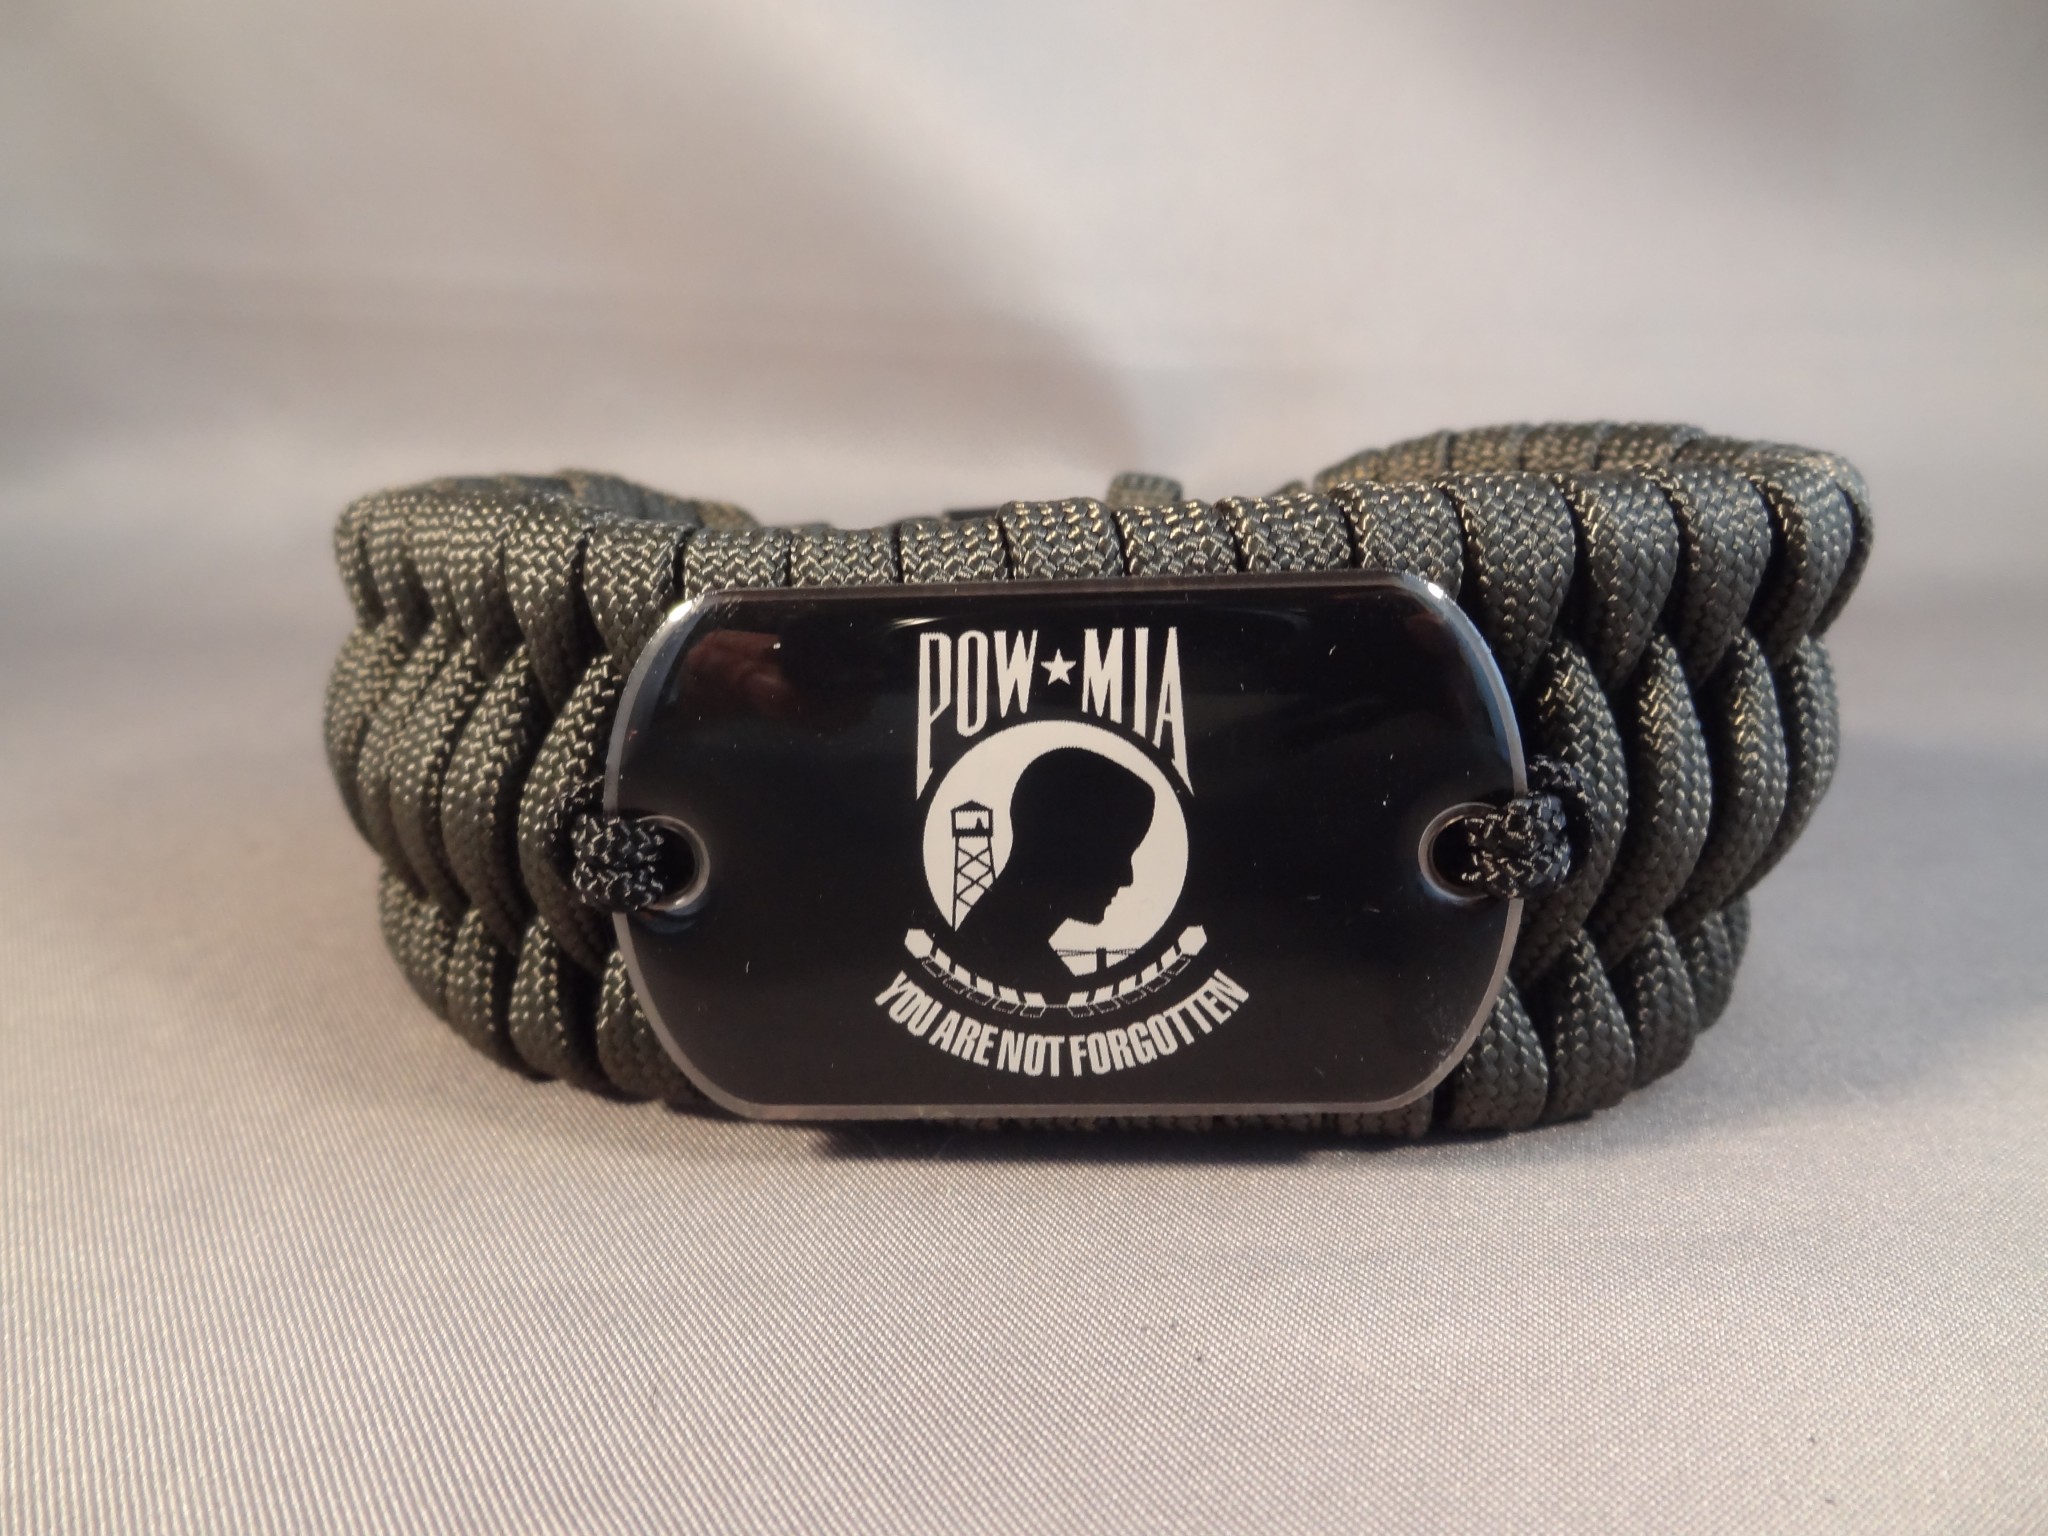 Prisoner of War Black Handmade Paracord Military Bracelet with POW MIA Emblem 